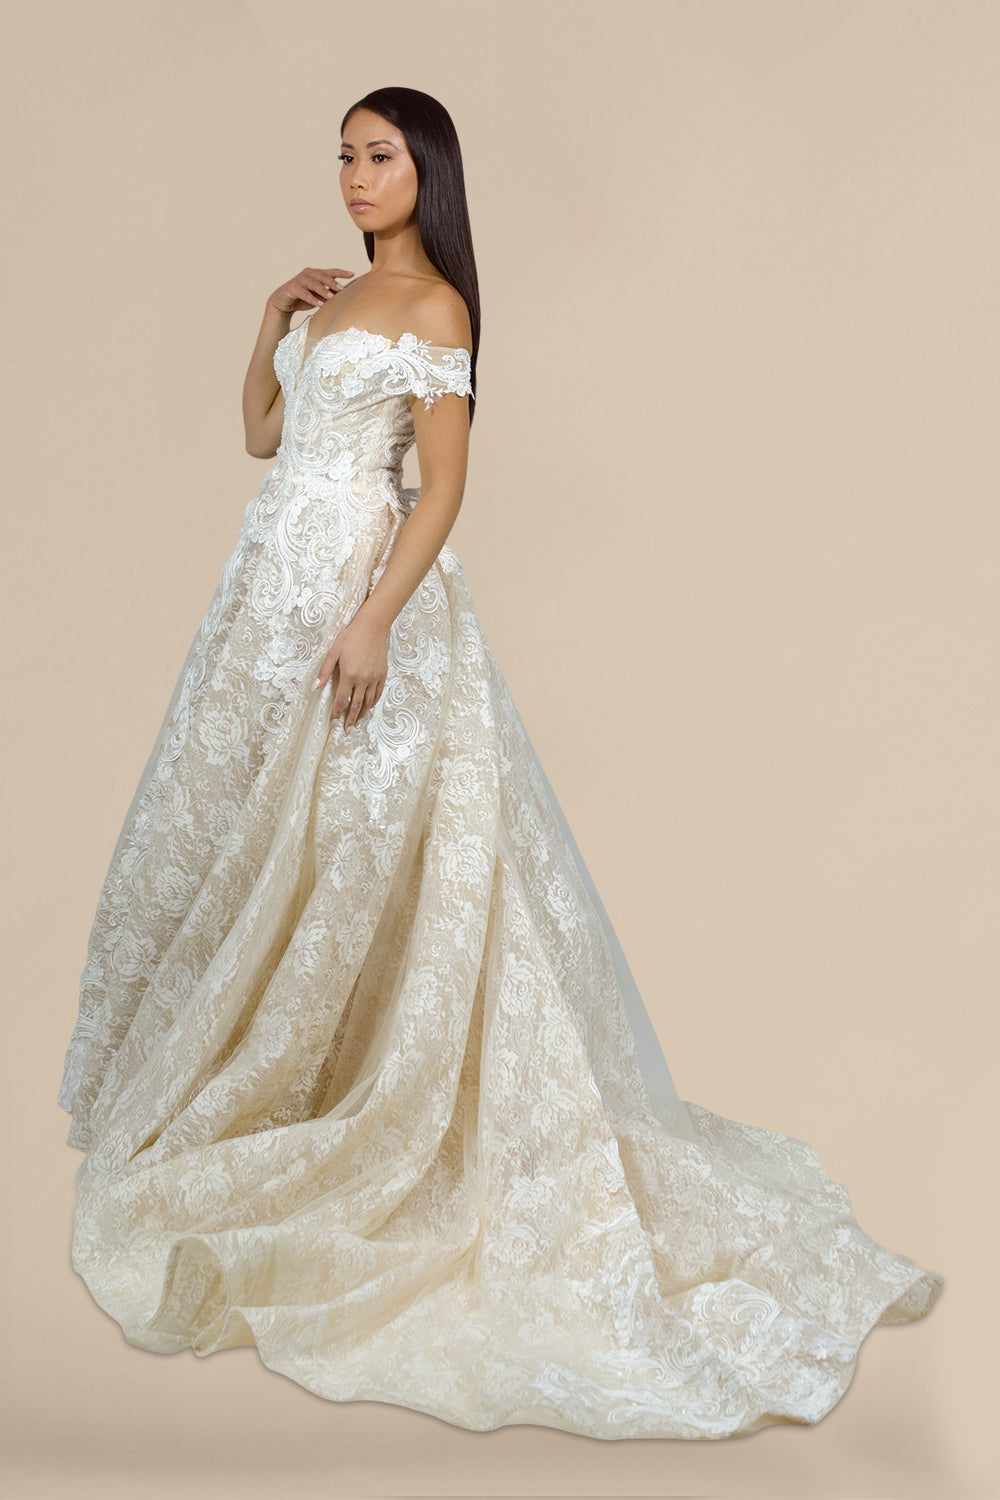 vintage style wedding dresses custom made australia online envious bridal 